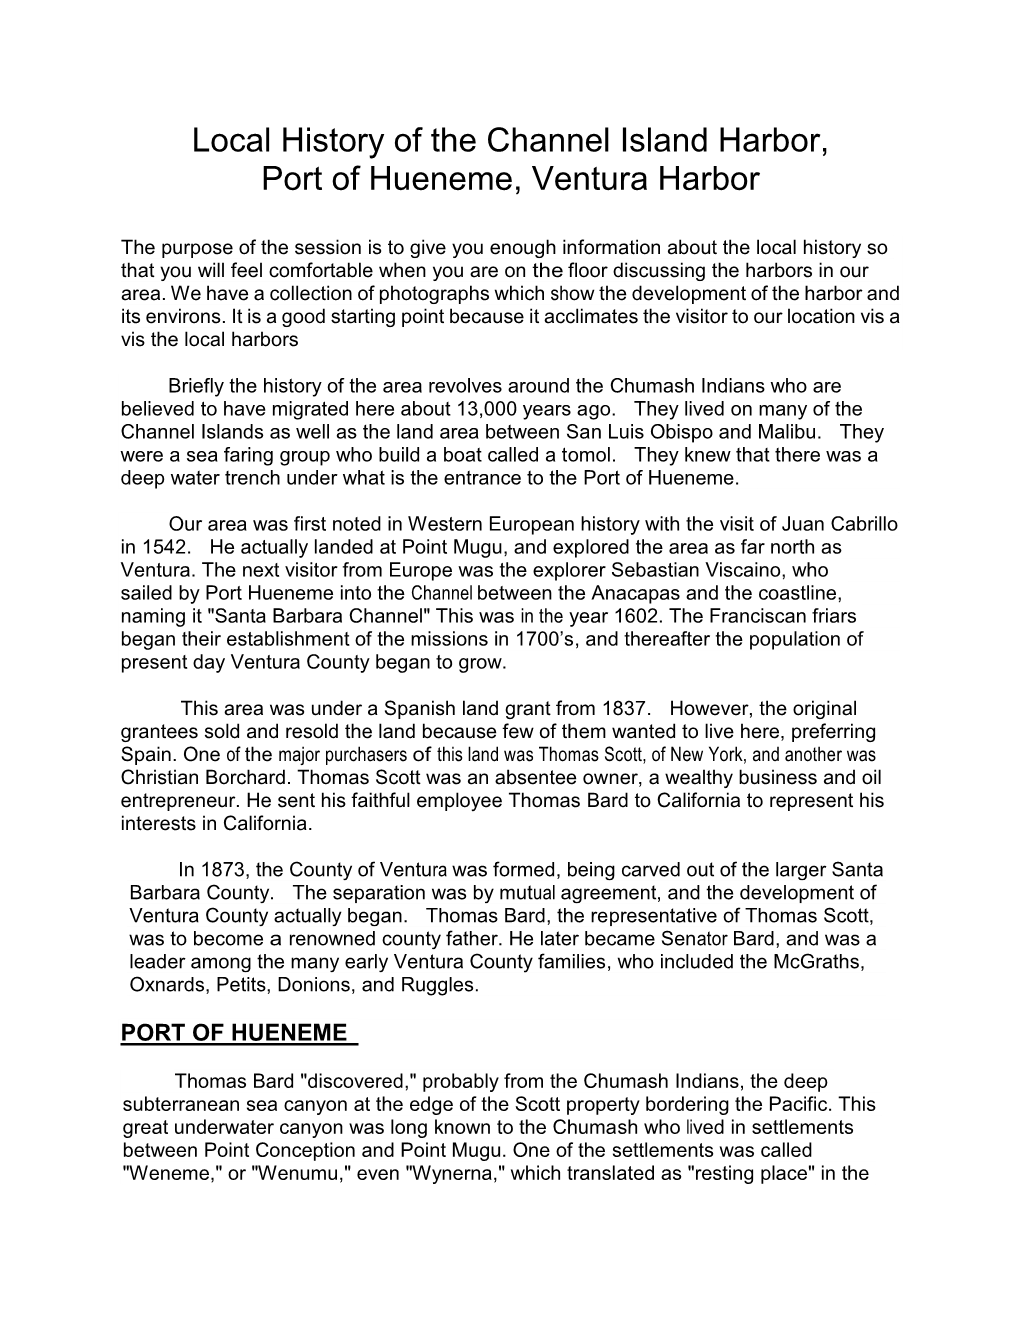 Local History of the Channel Island Harbor, Port of Hueneme, Ventura Harbor